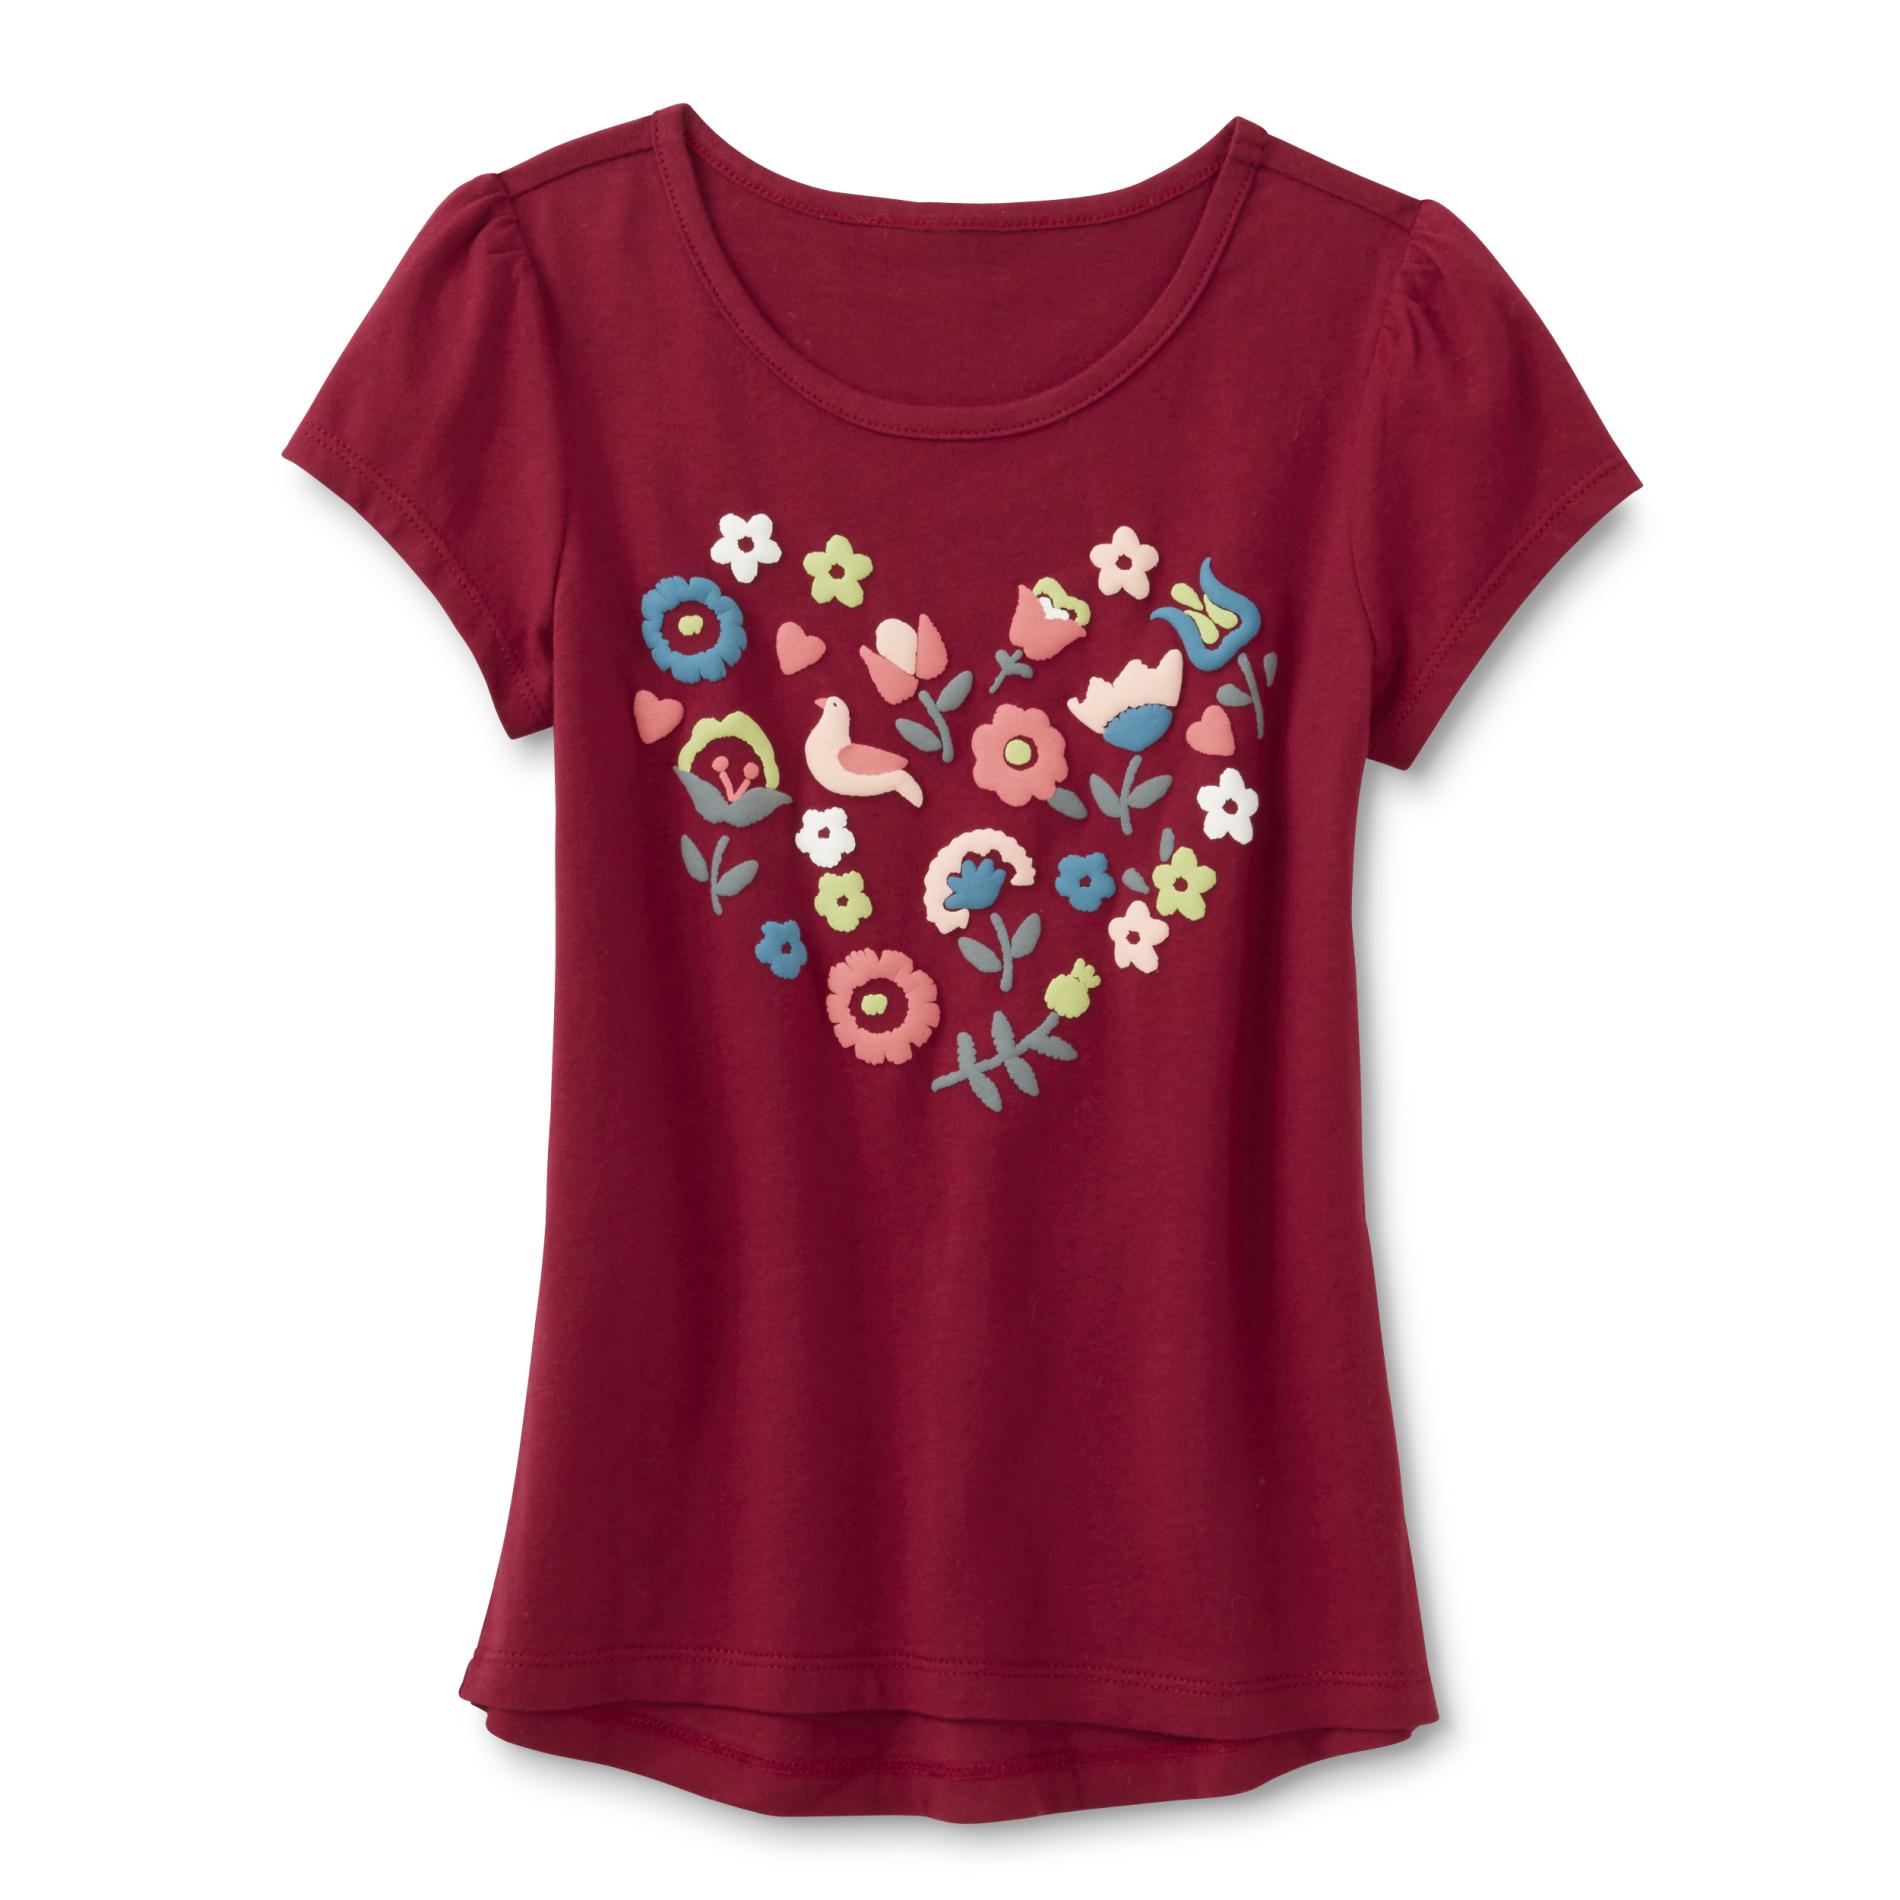 Toughskins Girl's Graphic T-Shirt - Floral Heart